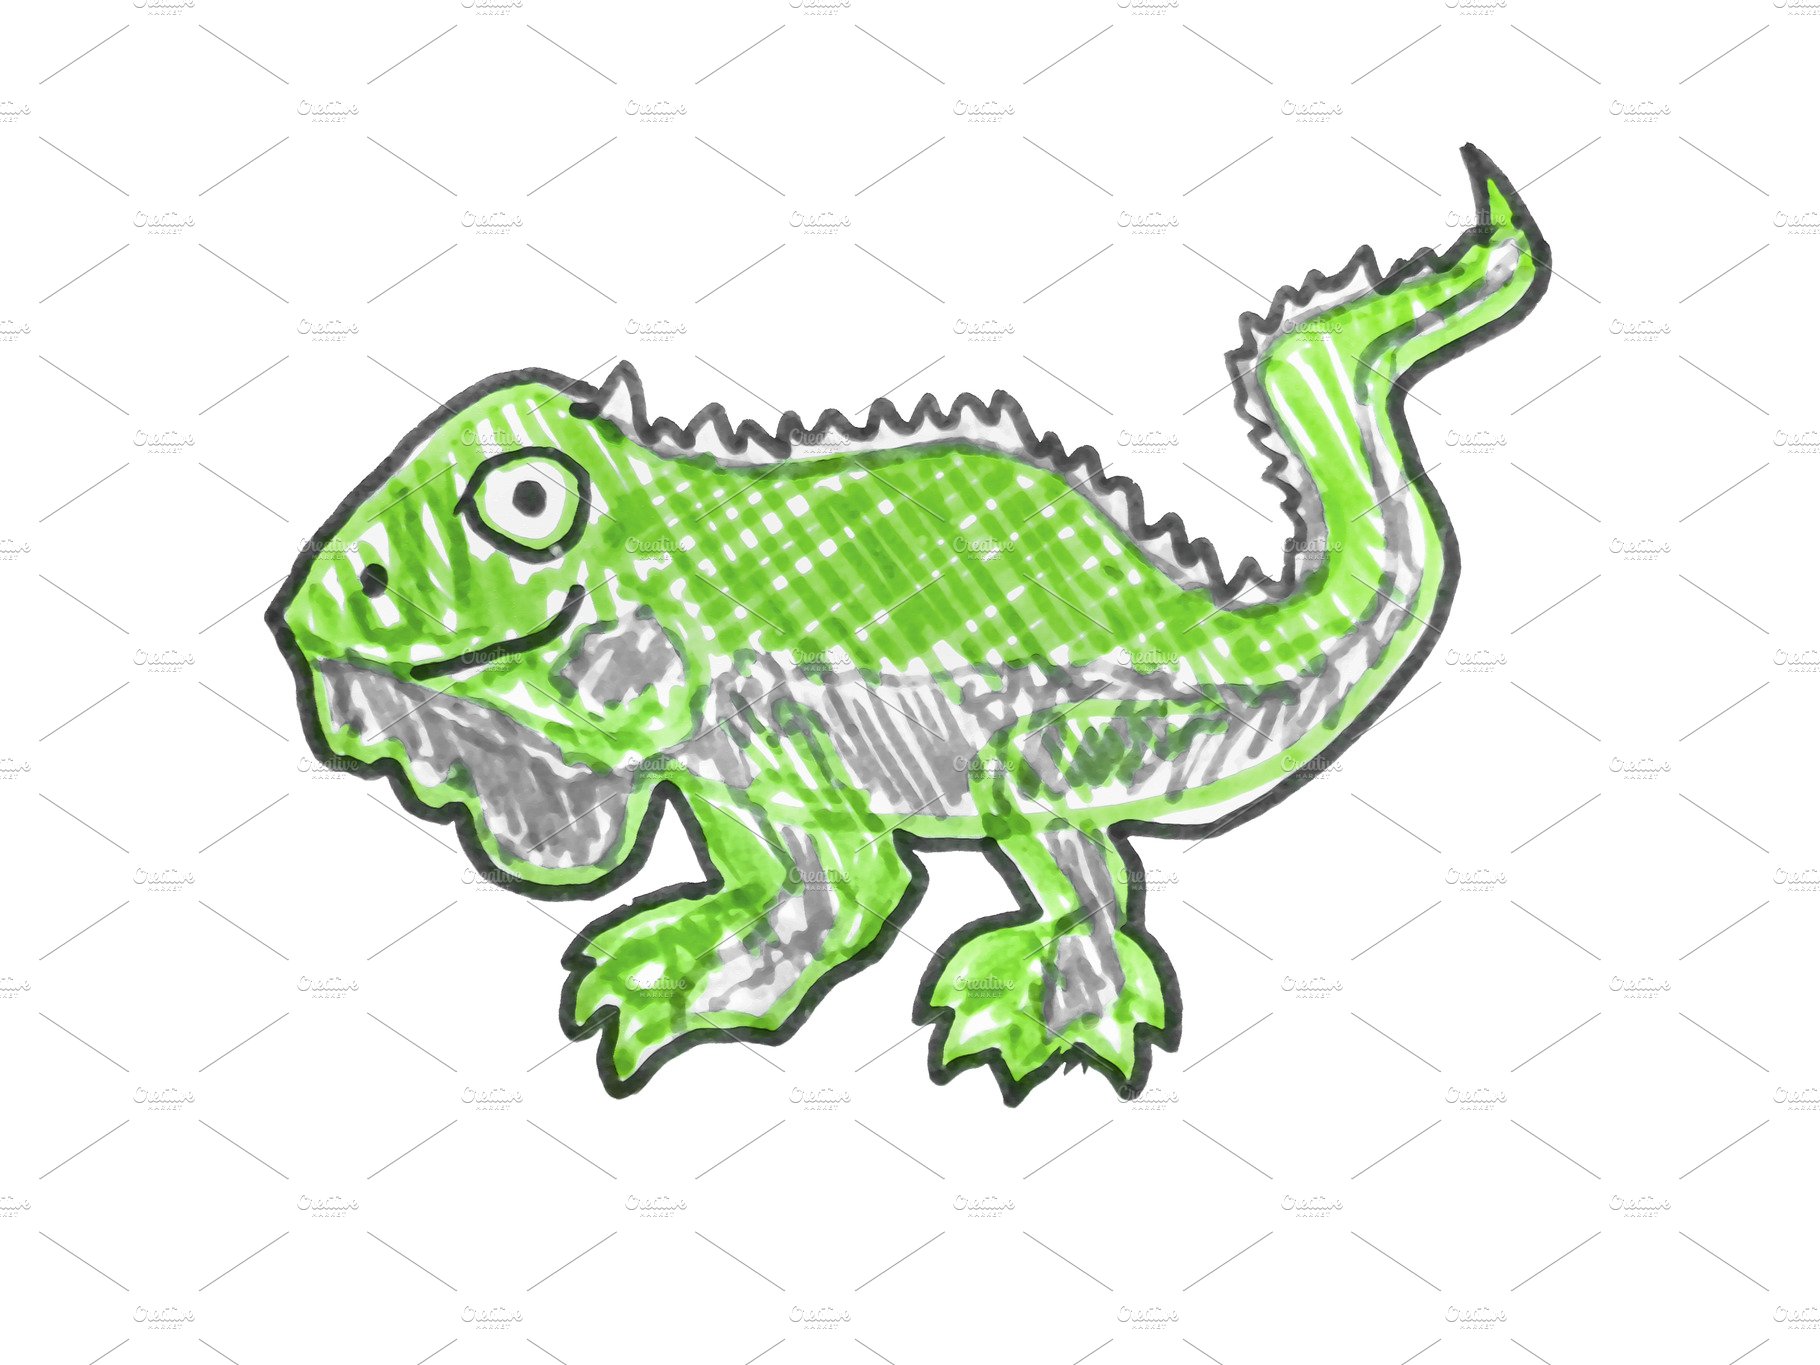 Iguana Sketchy Cartoon Kid Style Dra cover image.